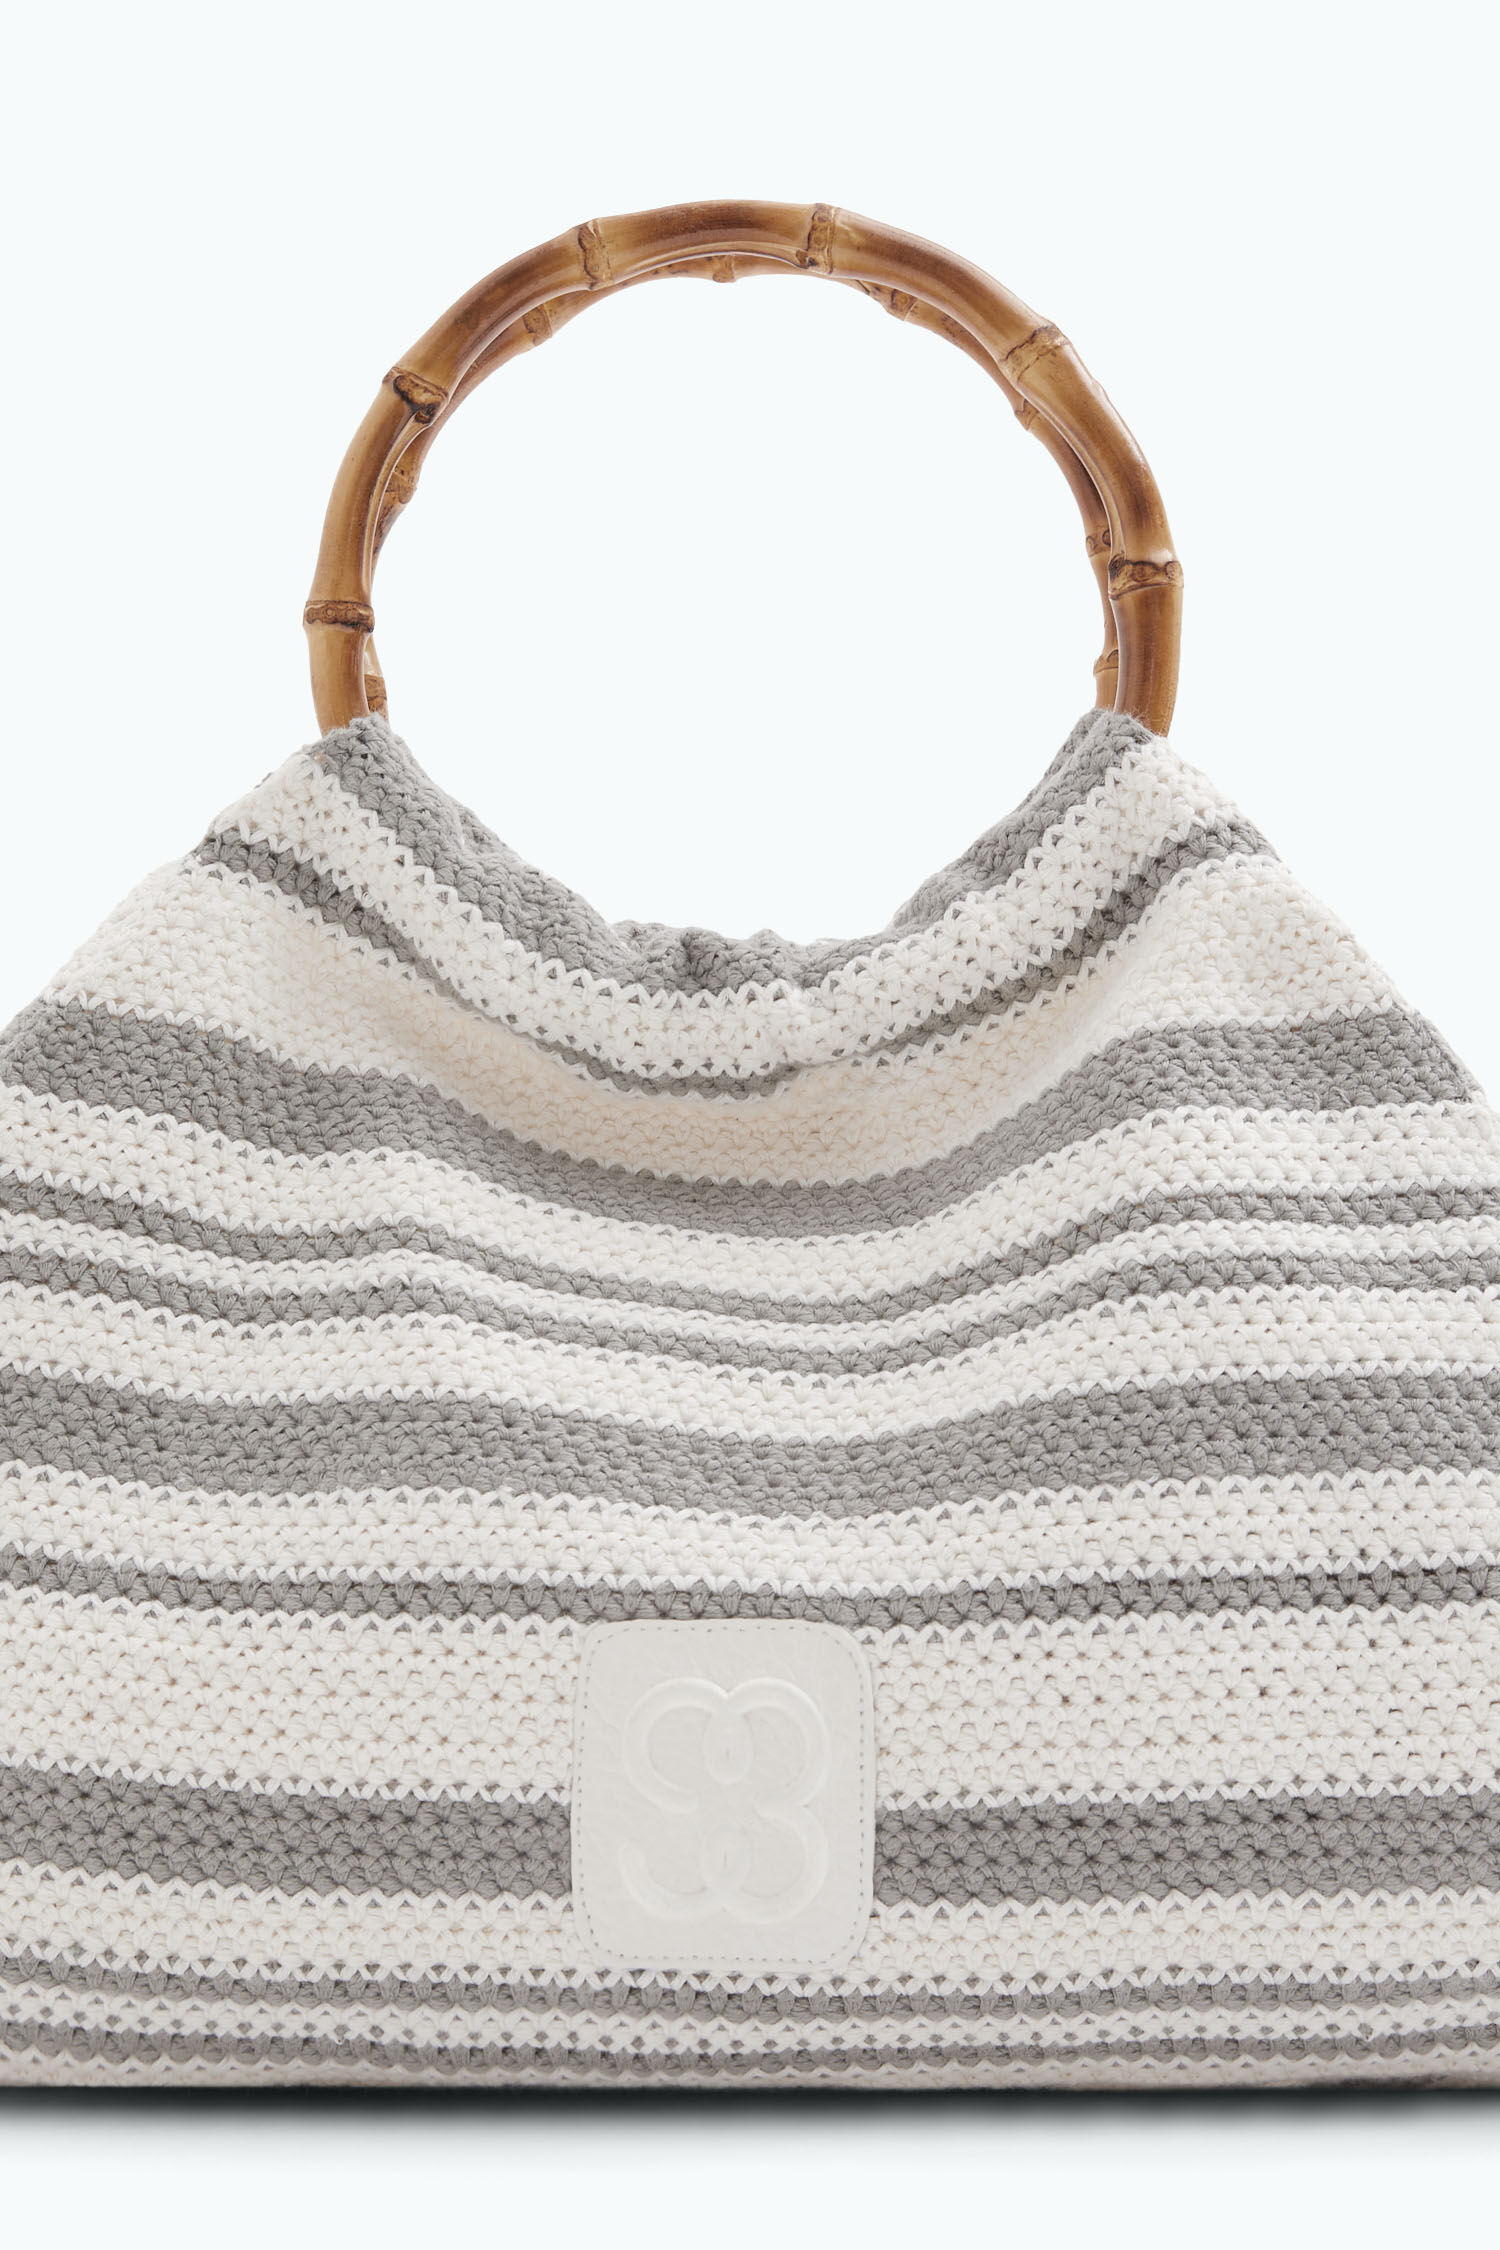 Tasche Bamboo Crochet Ivory/ Grey Stripes